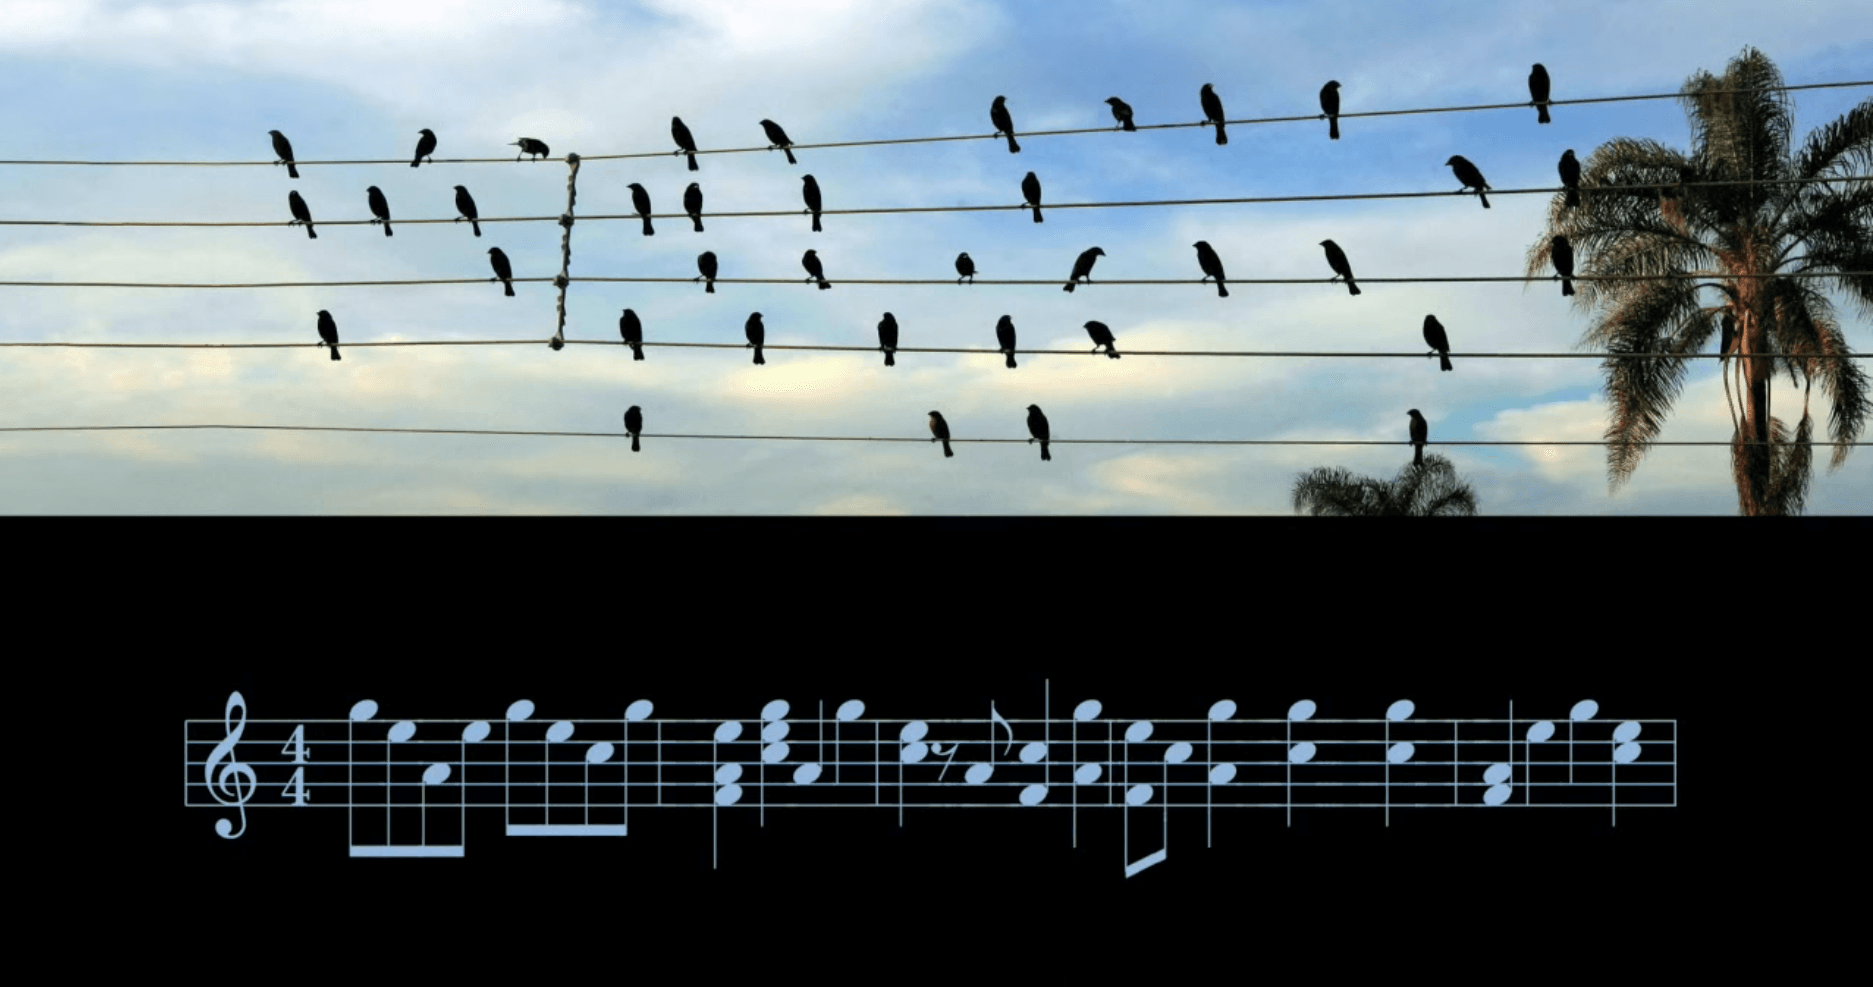 Музыка птицы на телефон. Птички на проводах. Ритм в природе. Птицы сидят на проводах. Ритм музыкальный.